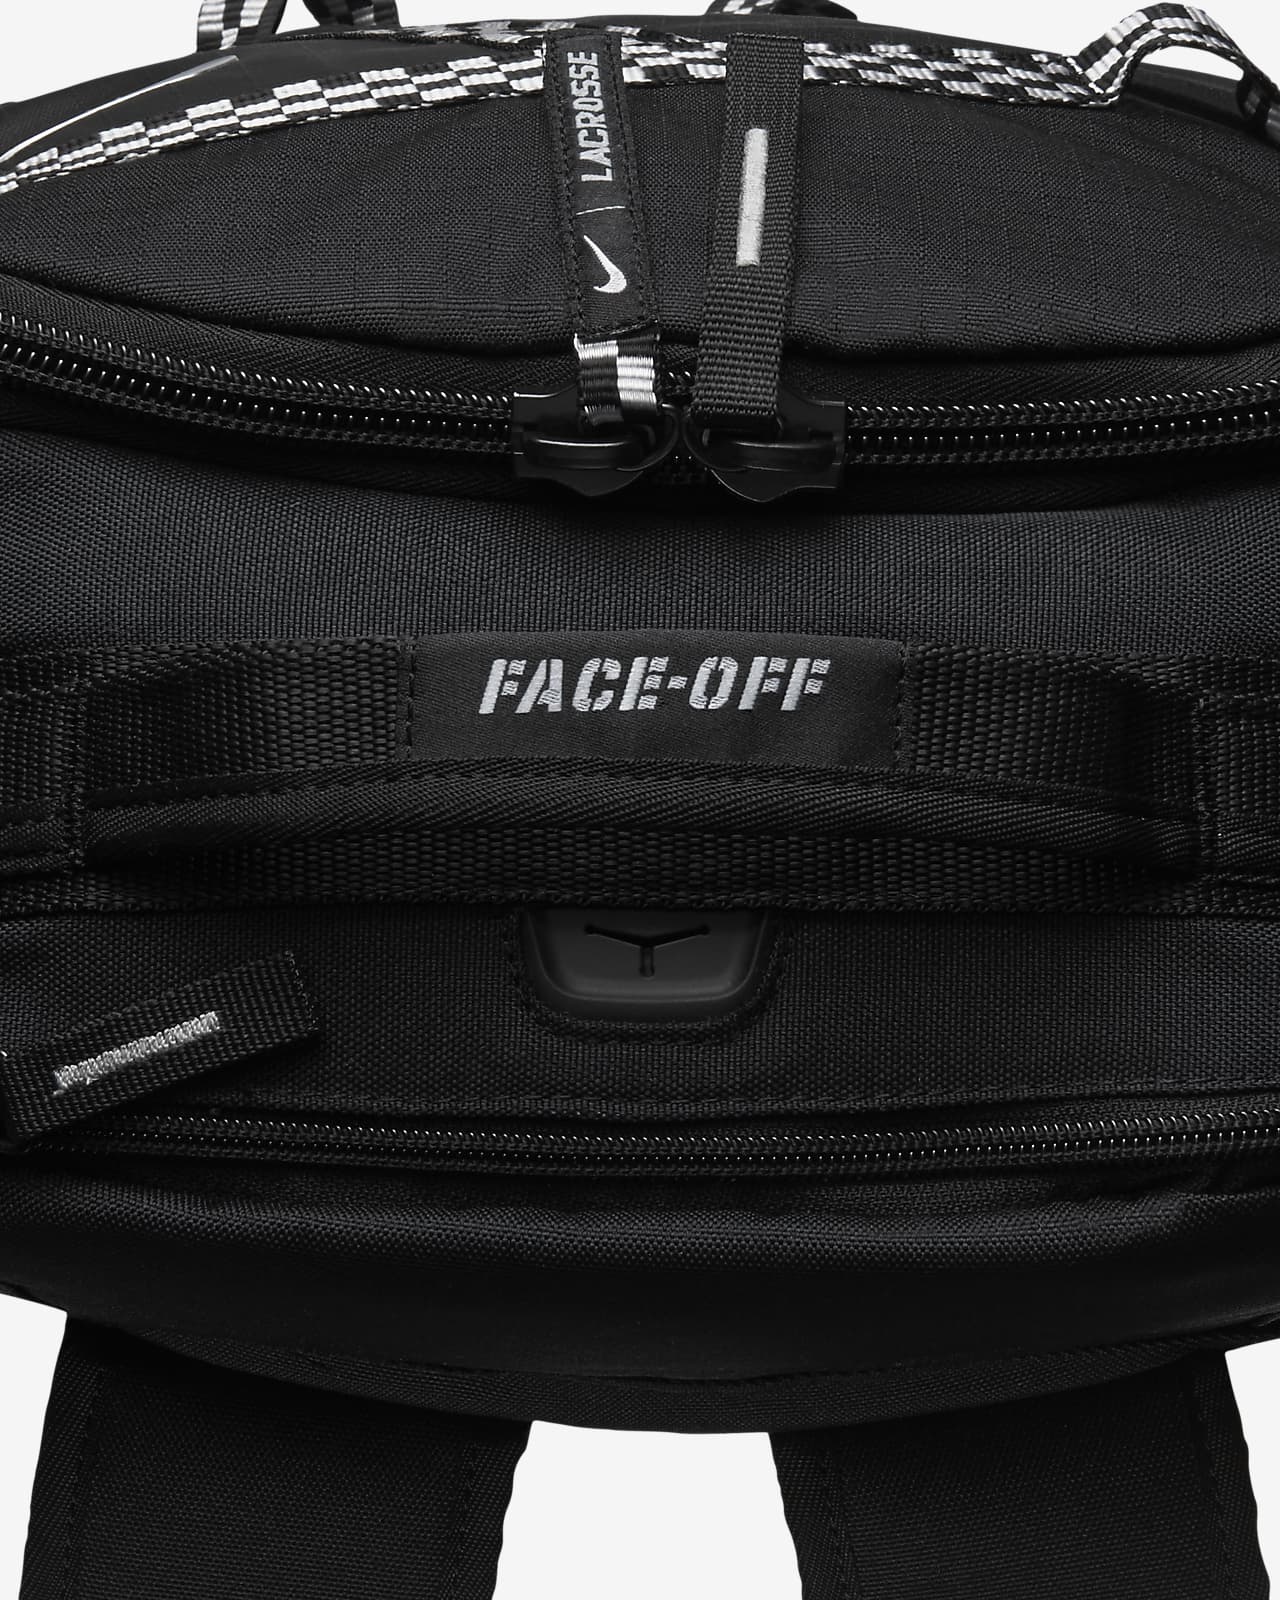 nike face off lacrosse backpack